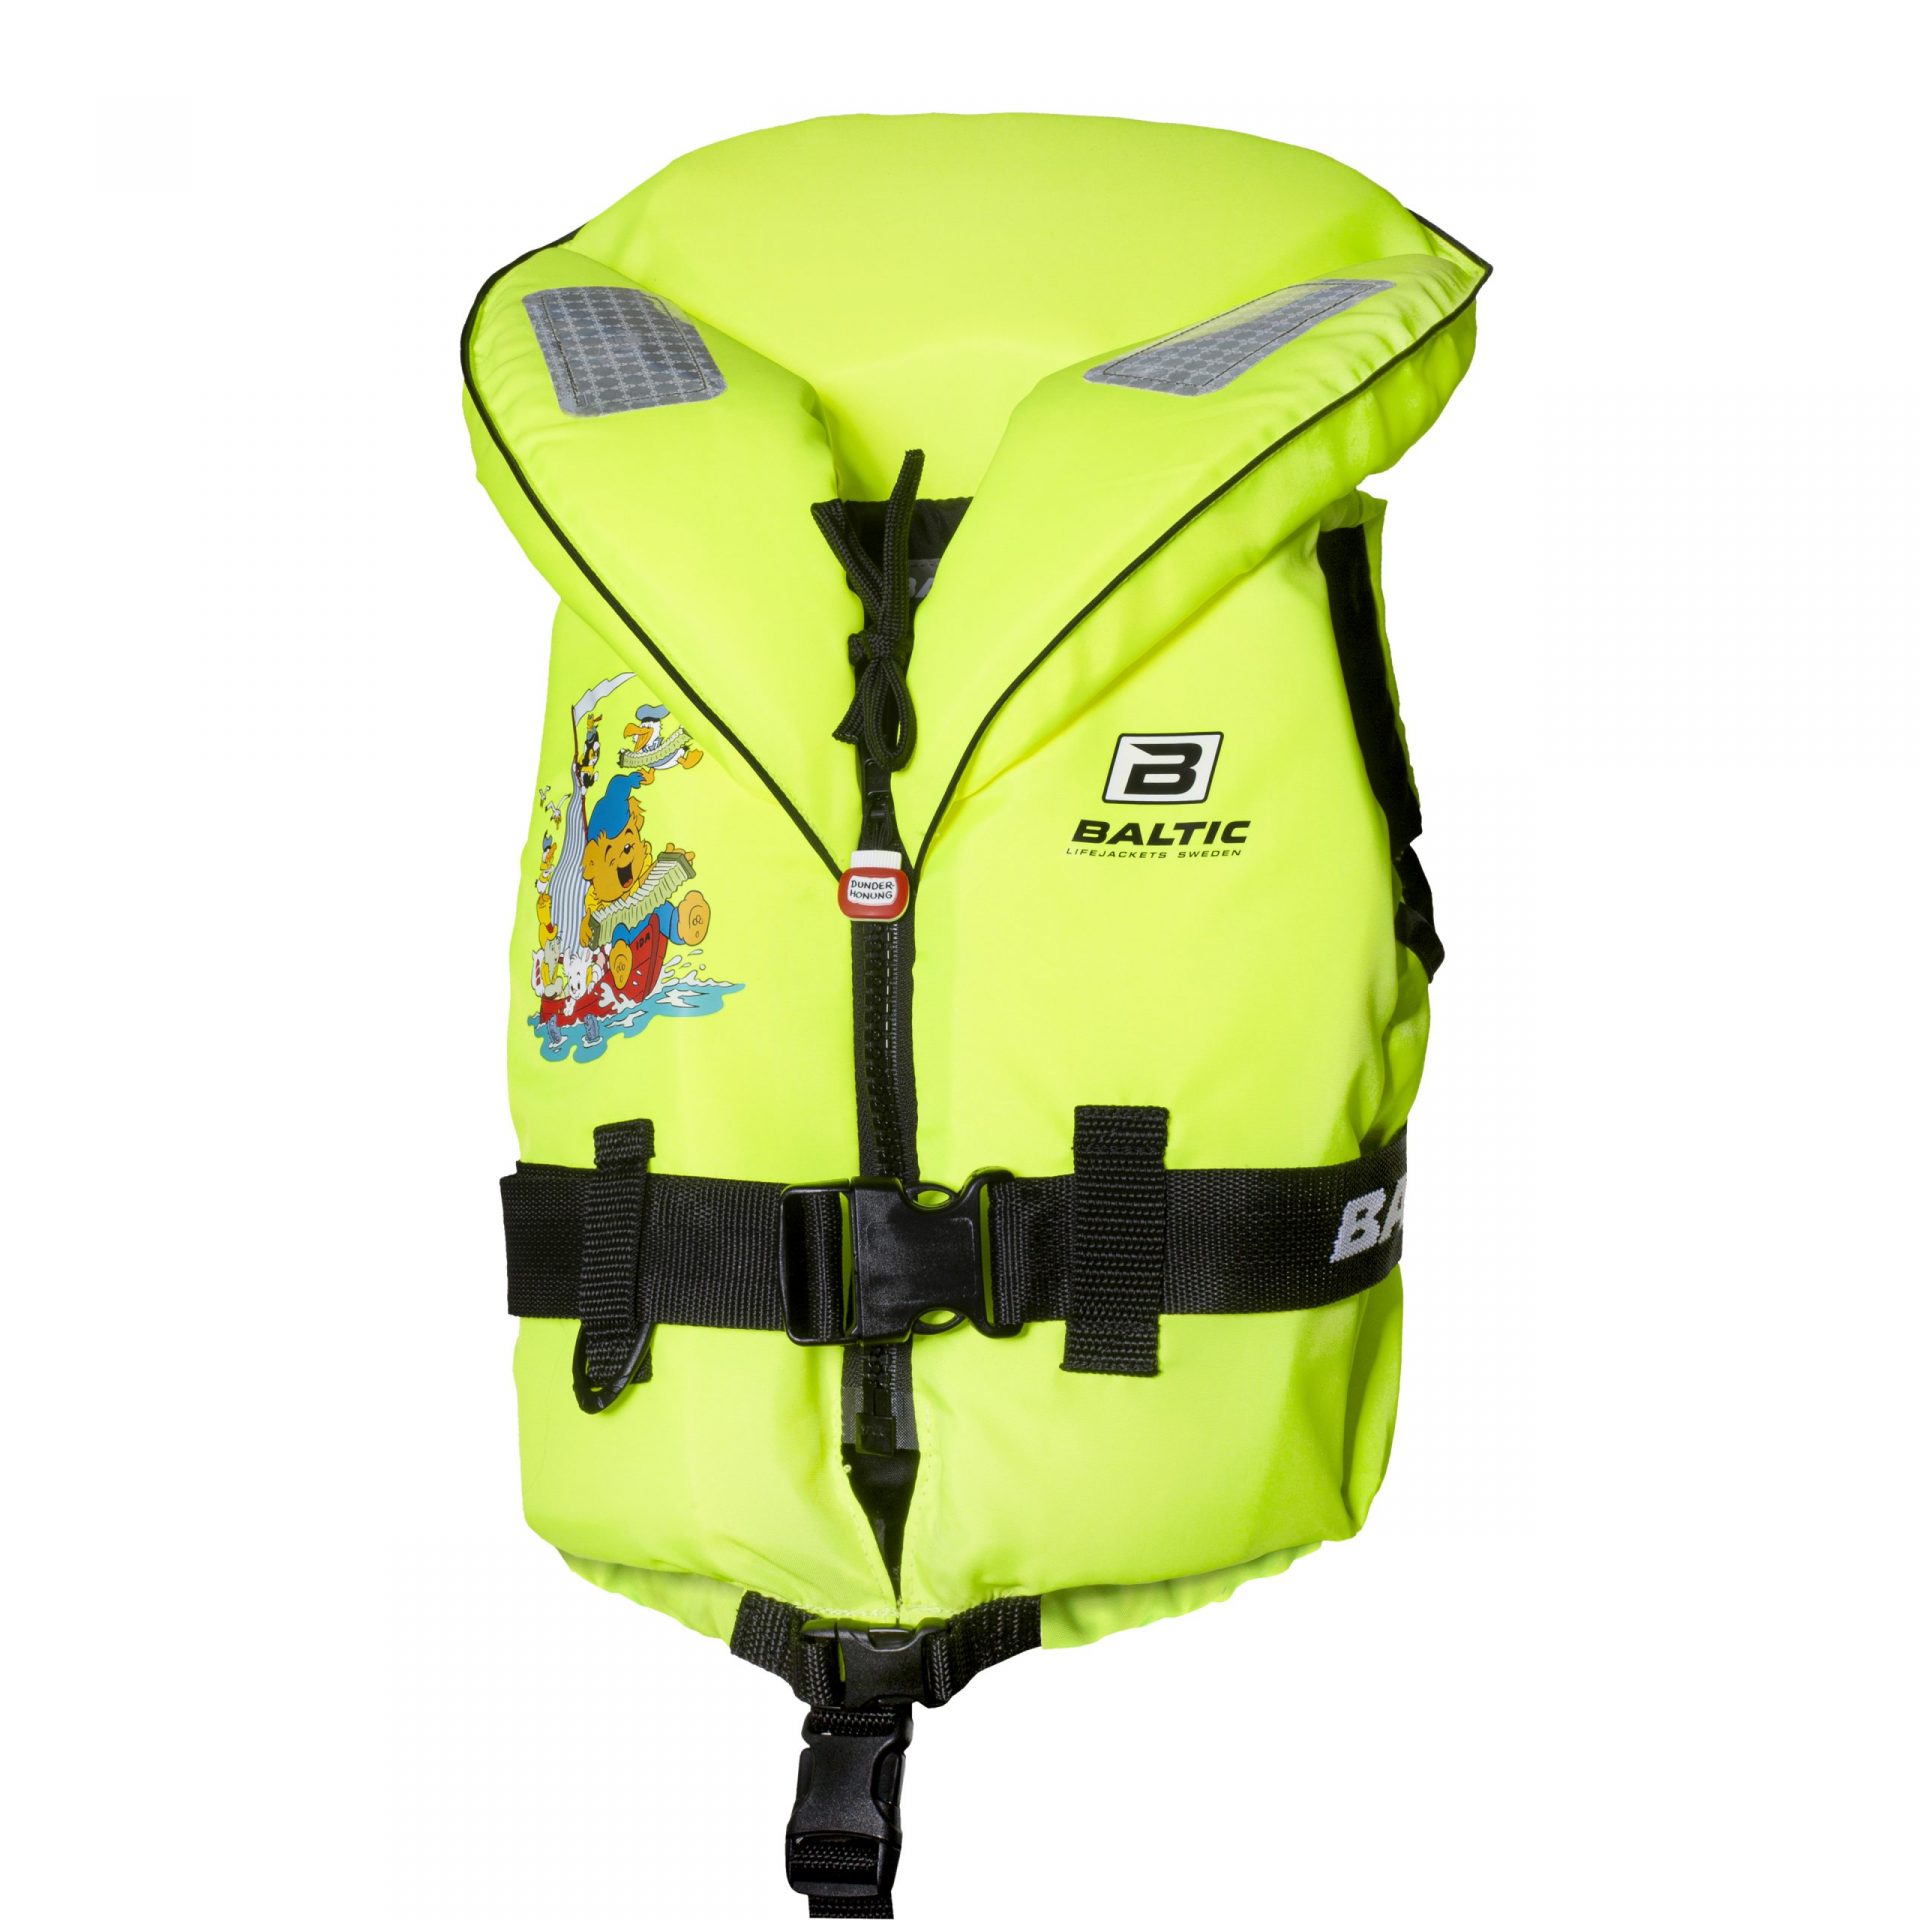 Sailing Life Jacket Kids Adult Life Vest Floatation Device Safety Gear 